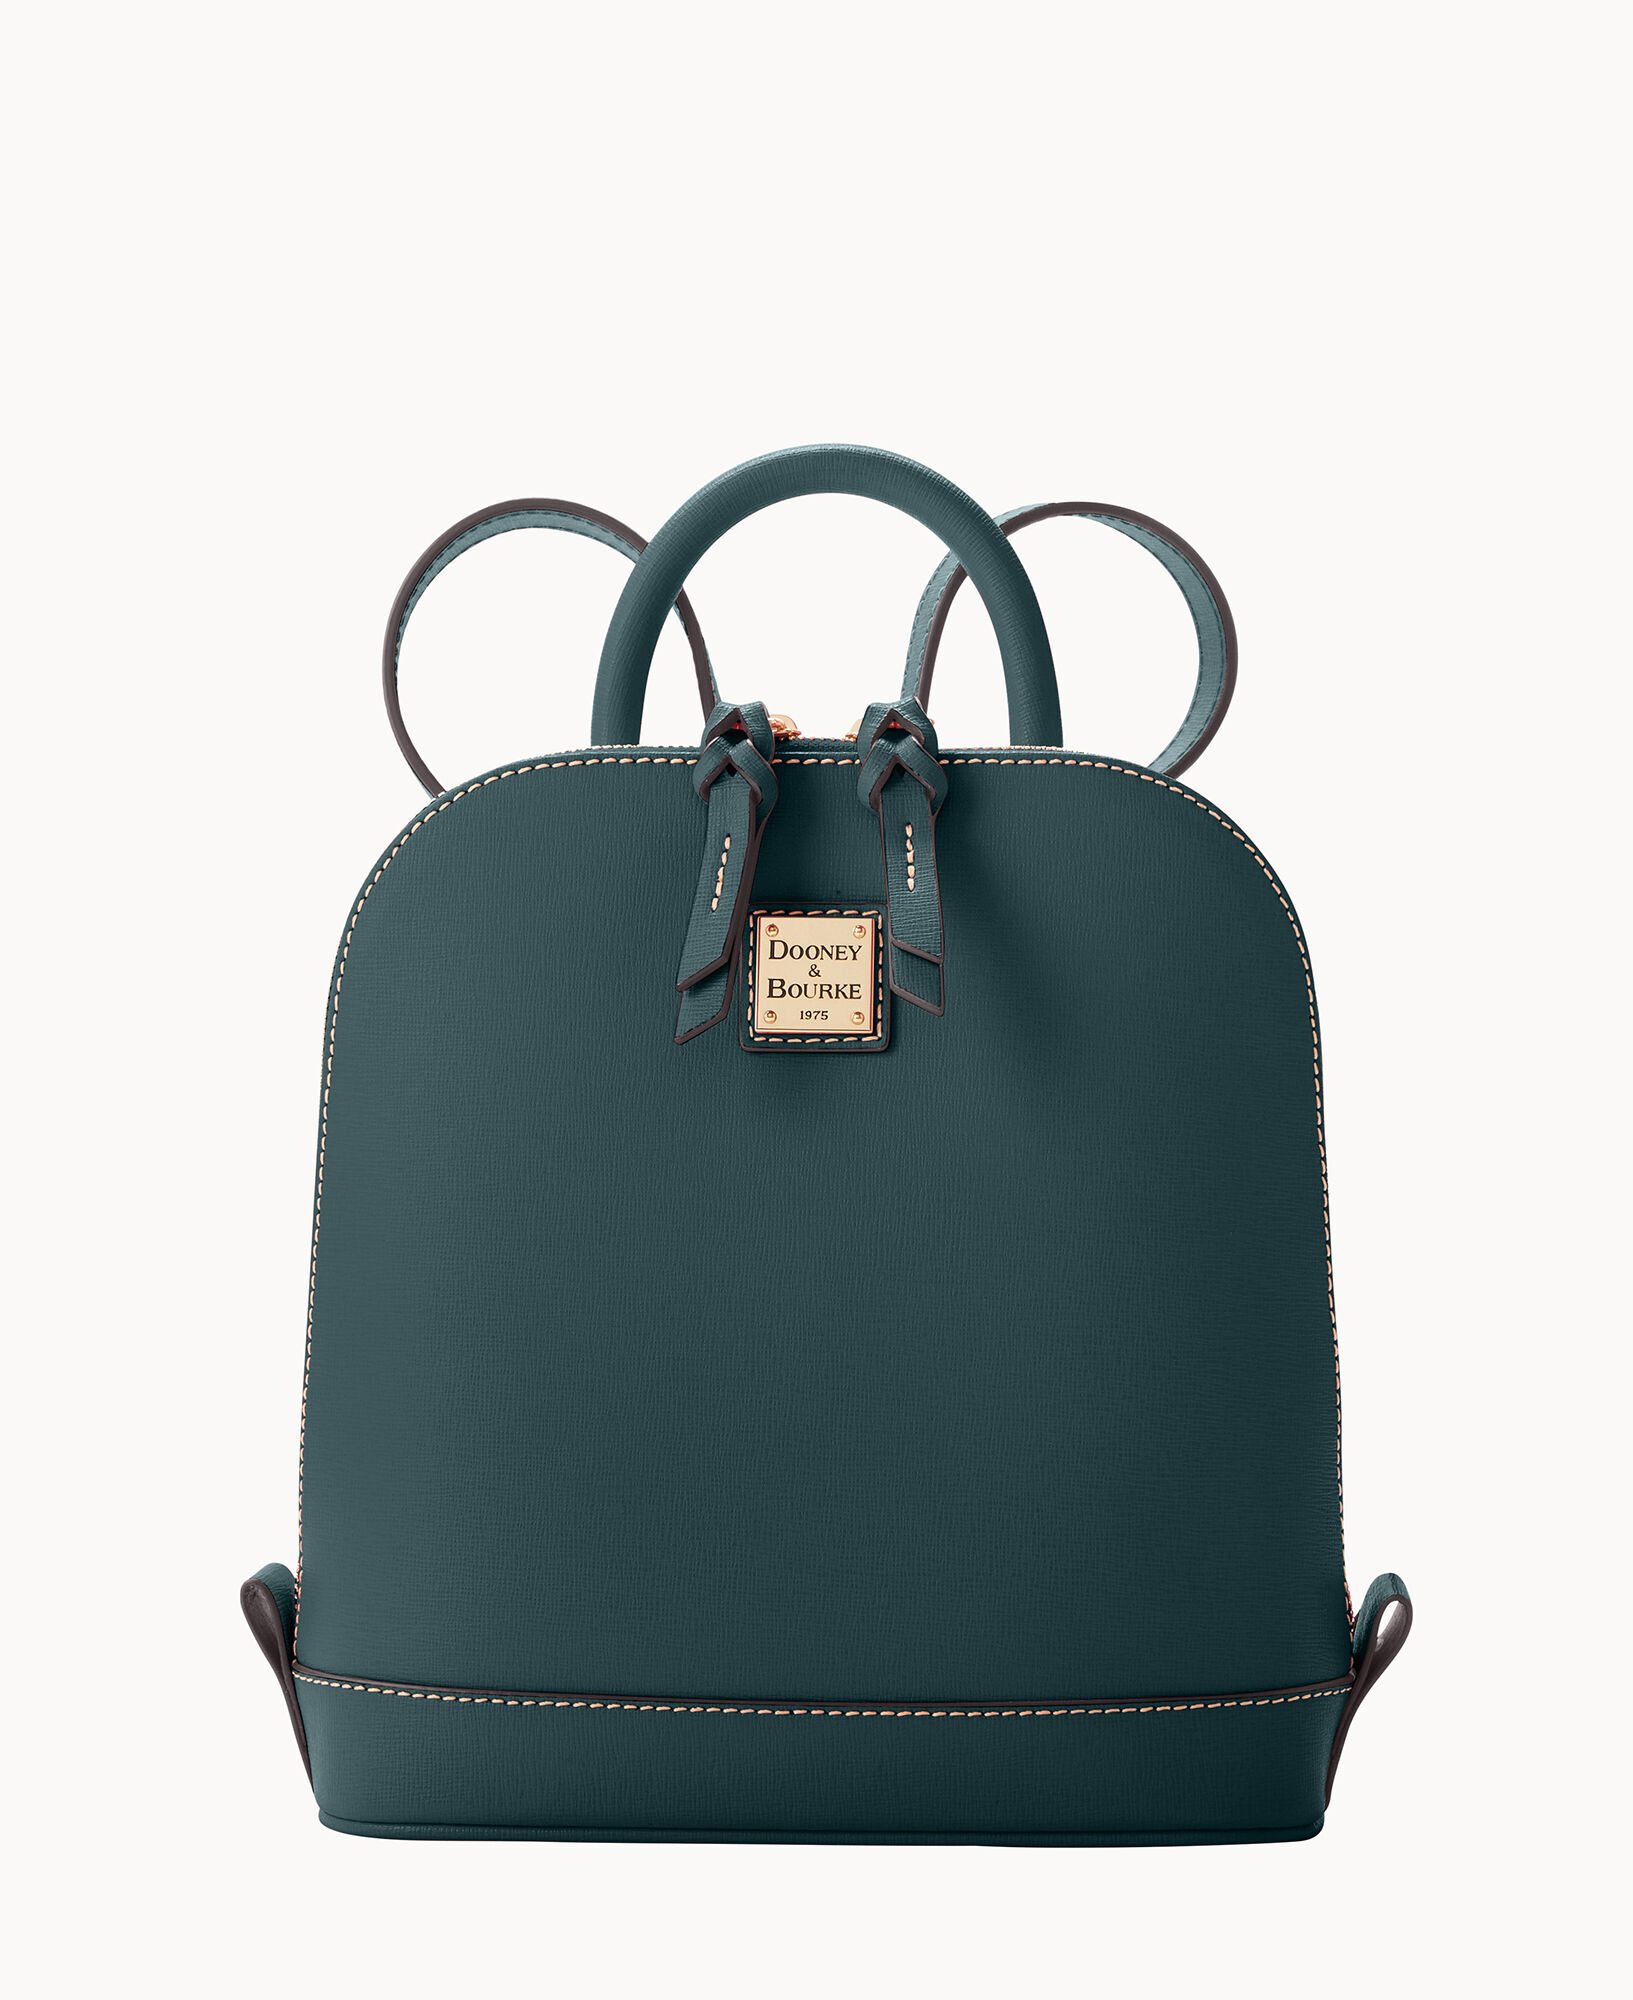 Dooney & Bourke Handbag, Saffiano Small Zip Crossbody - Ivy: Handbags